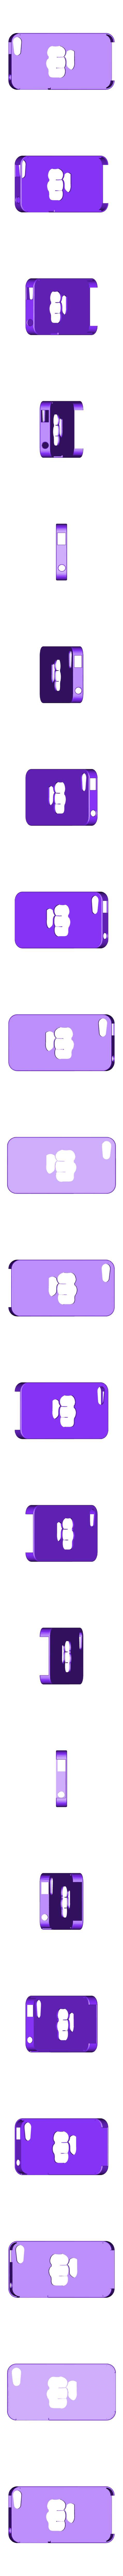 iphone_4s_pewdiepie_case__3_.stl Download free OBJ file Pewdiepie Bro fist iPhone4/4s case • 3D printable object, Mathi_